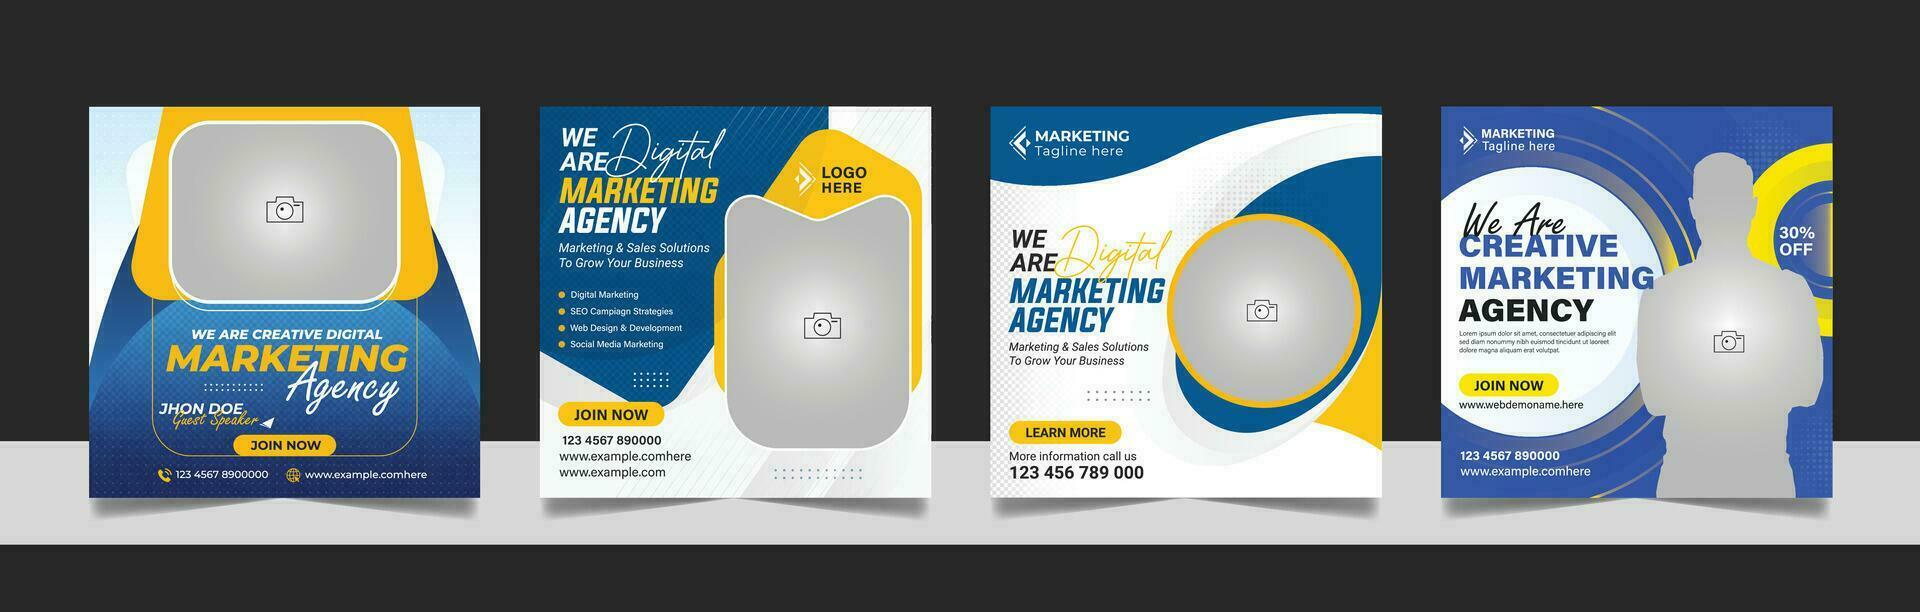 Digital Marketing Agency Online Webinar Social Media Post Set, Corporate Business Promotion Web Banner, Square Flyer Design Template vector